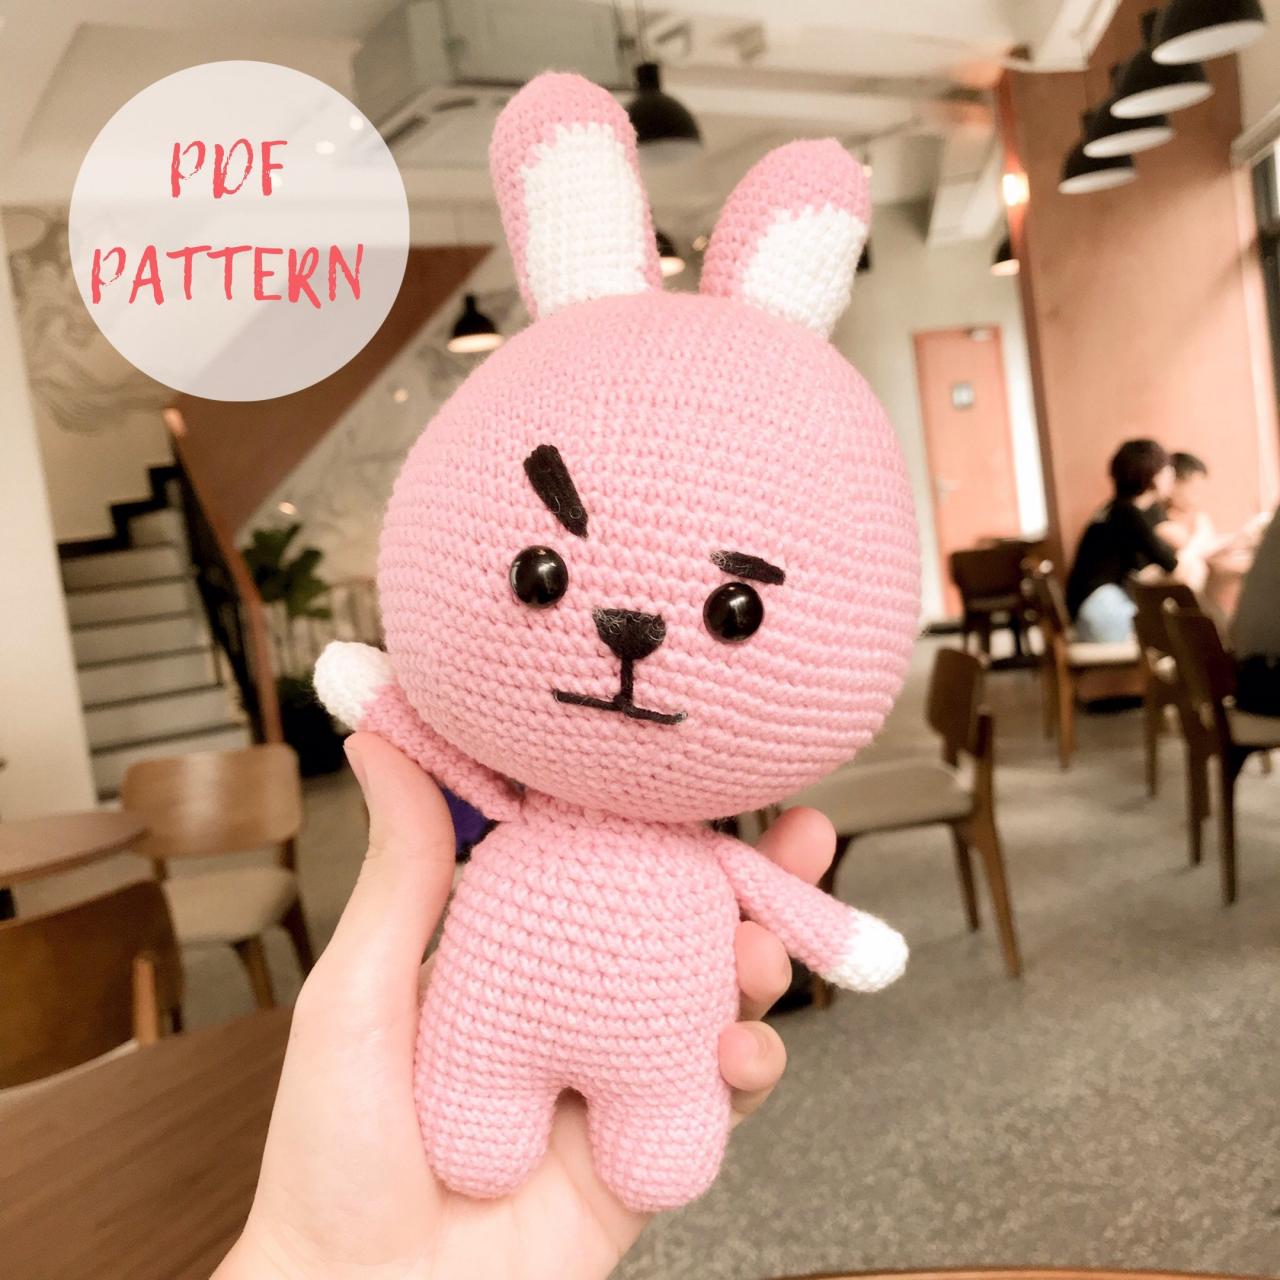 Cooky Bt21 Crochet Pattern - Bts Army Korean Band Doll, Rabbit Amigurumi Pattern (english)